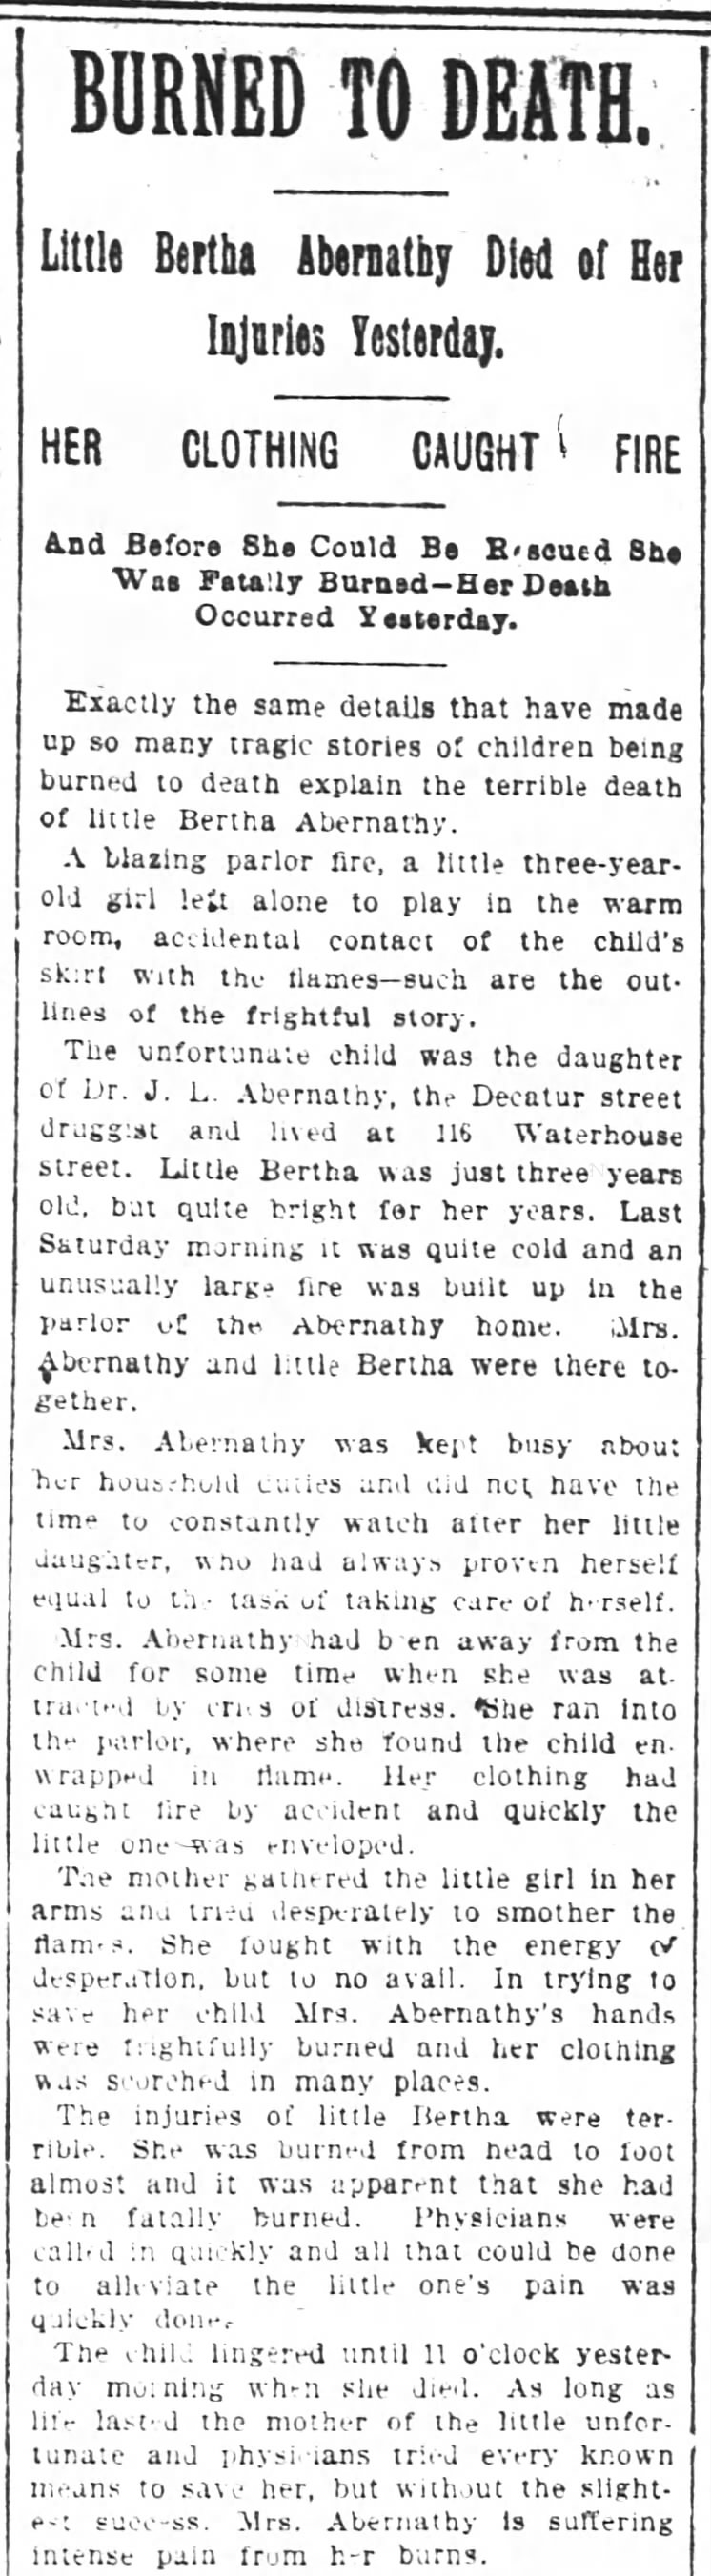 Abernathy girl burns to death
Jan. 16, 1895. p. 8.